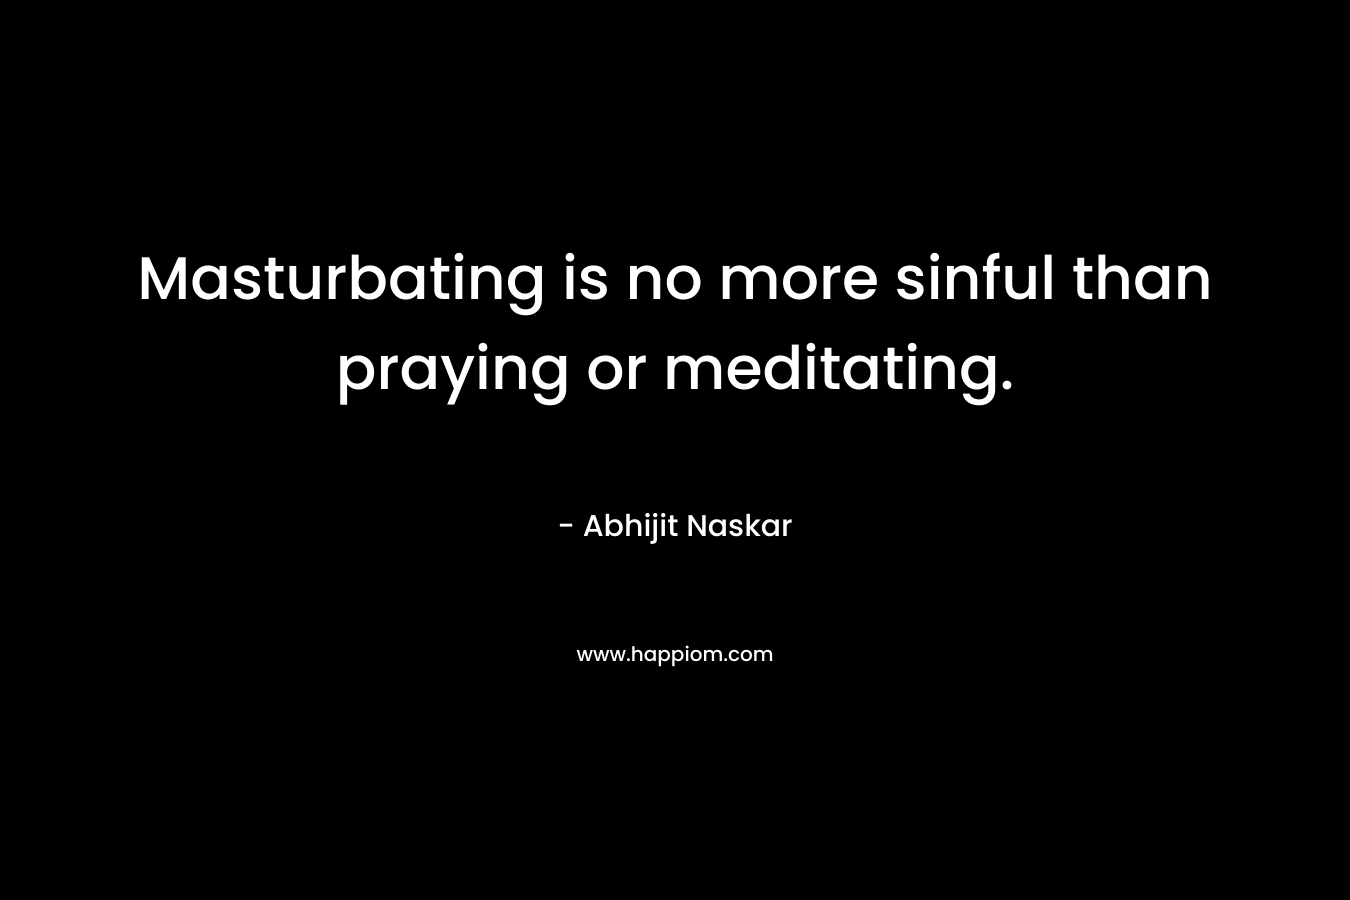 Masturbating is no more sinful than praying or meditating. – Abhijit Naskar